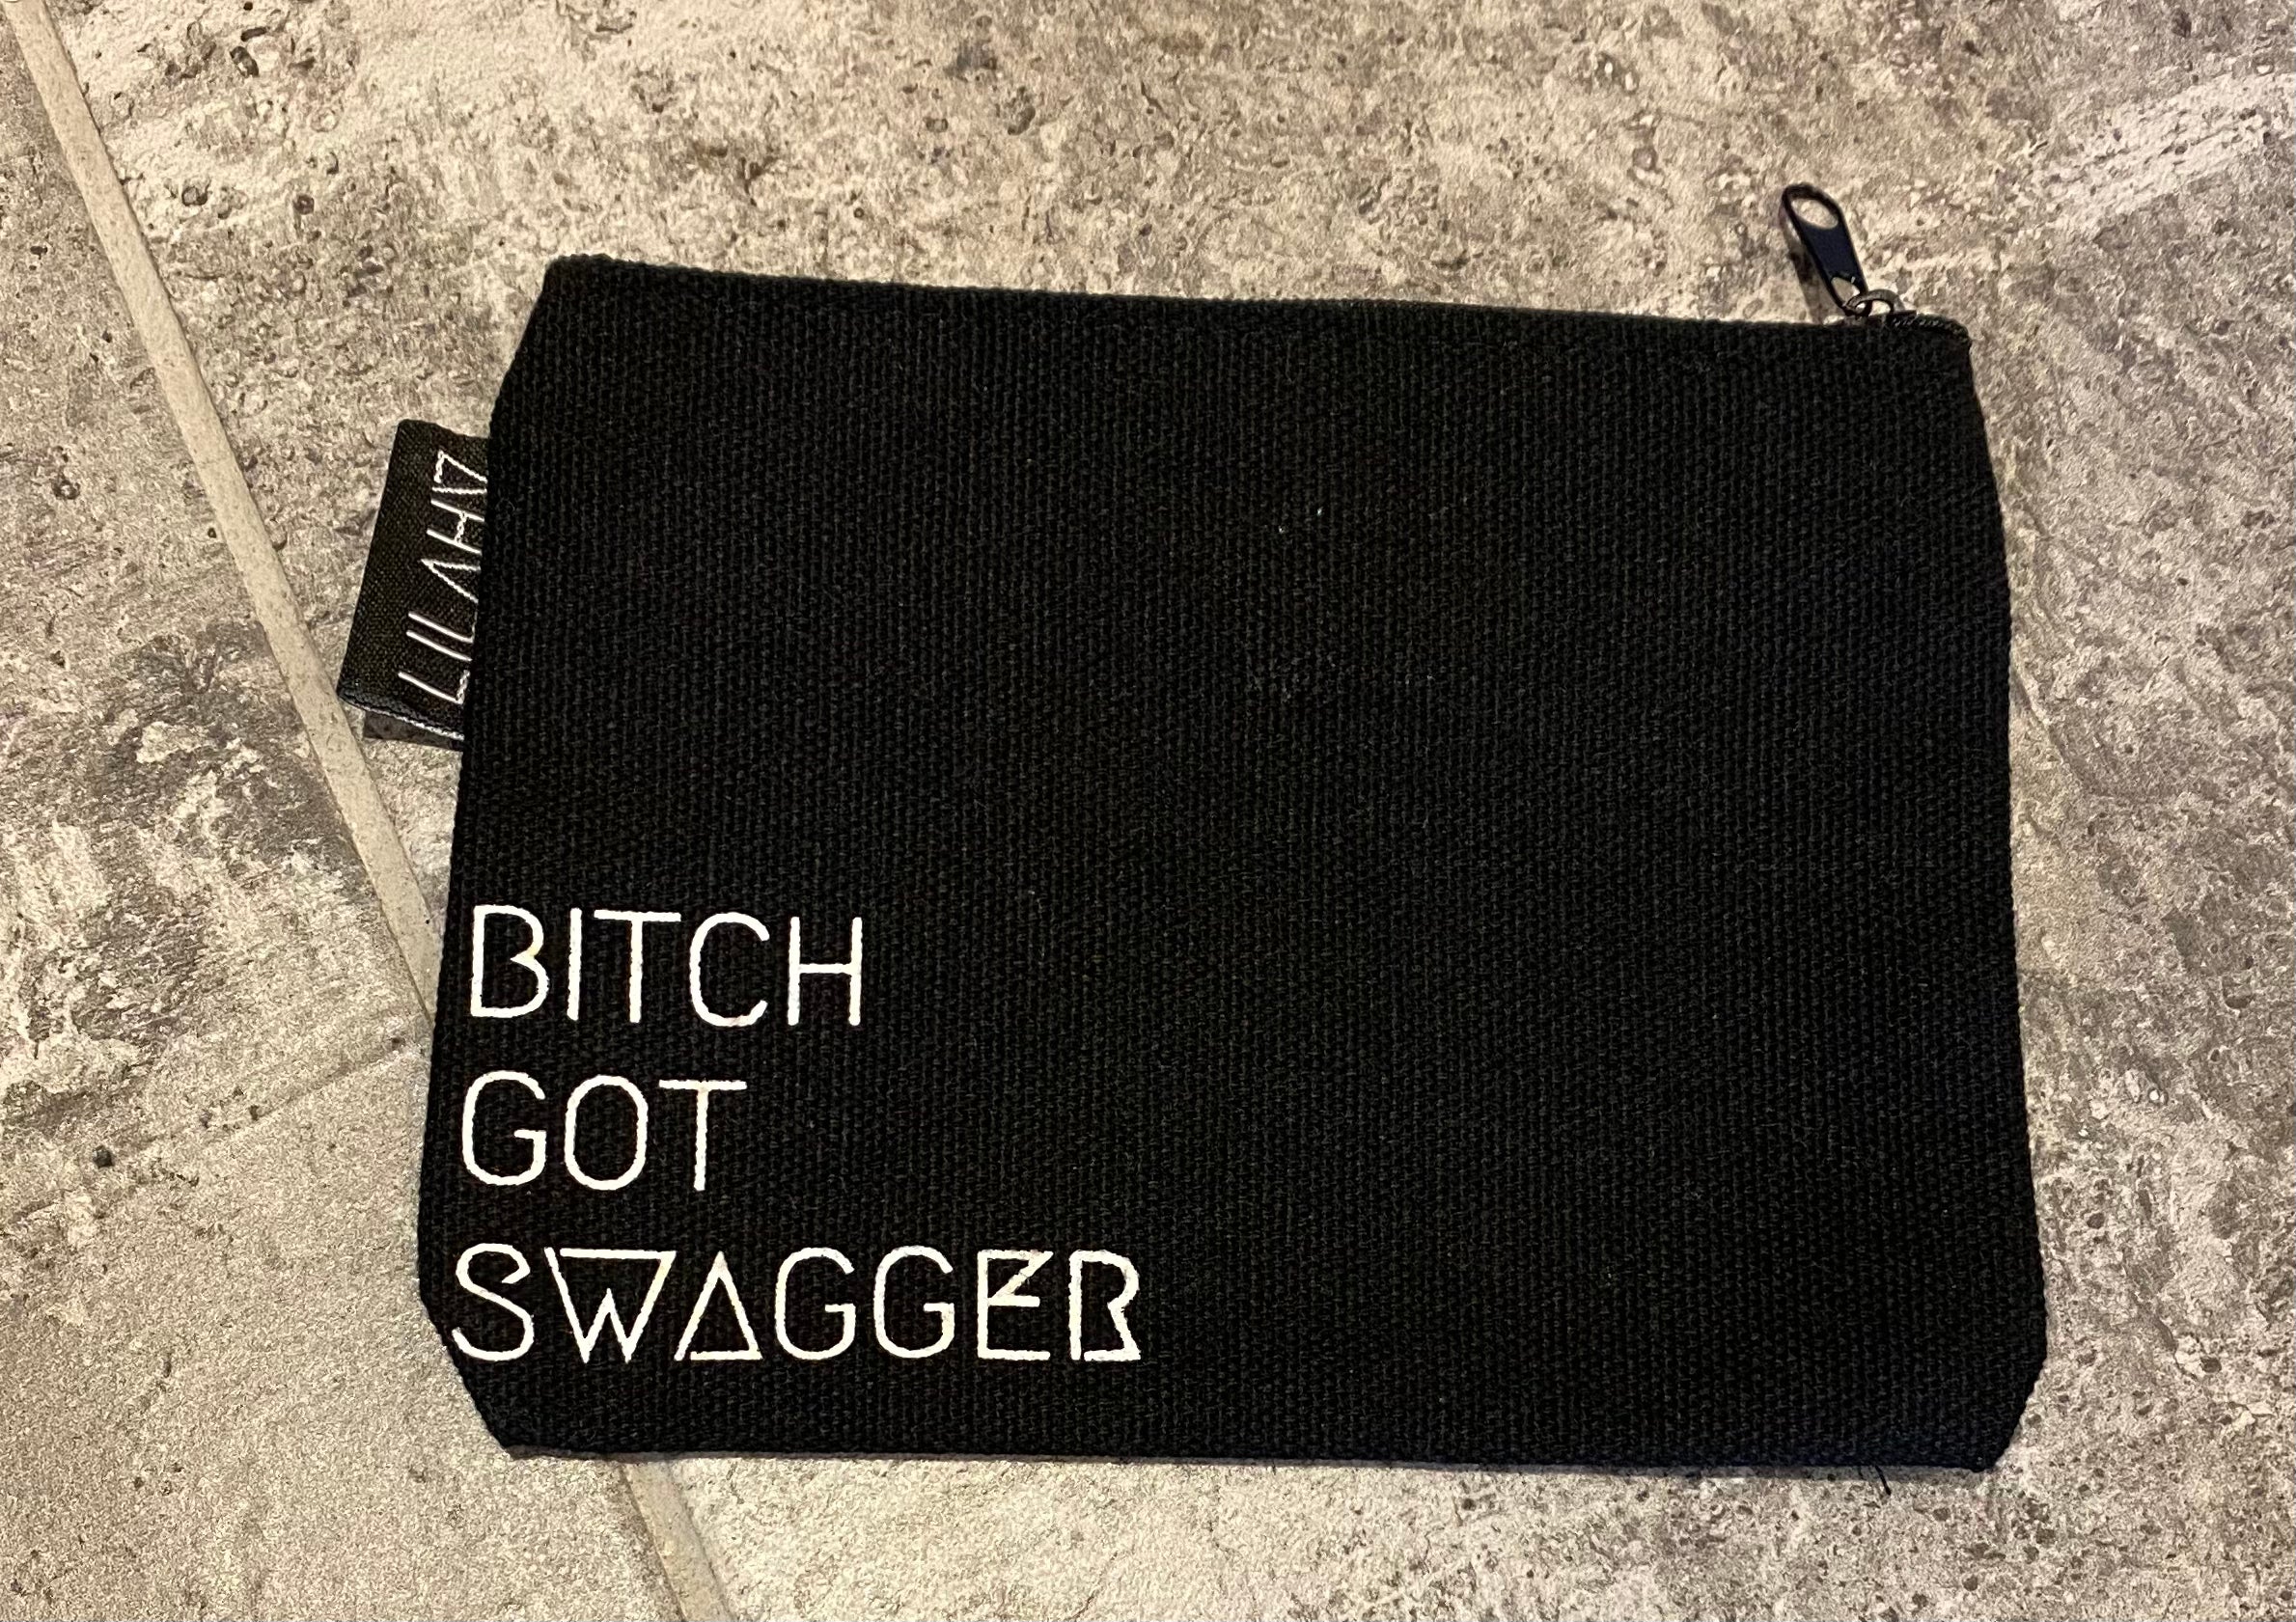 Bitch got swagger bag